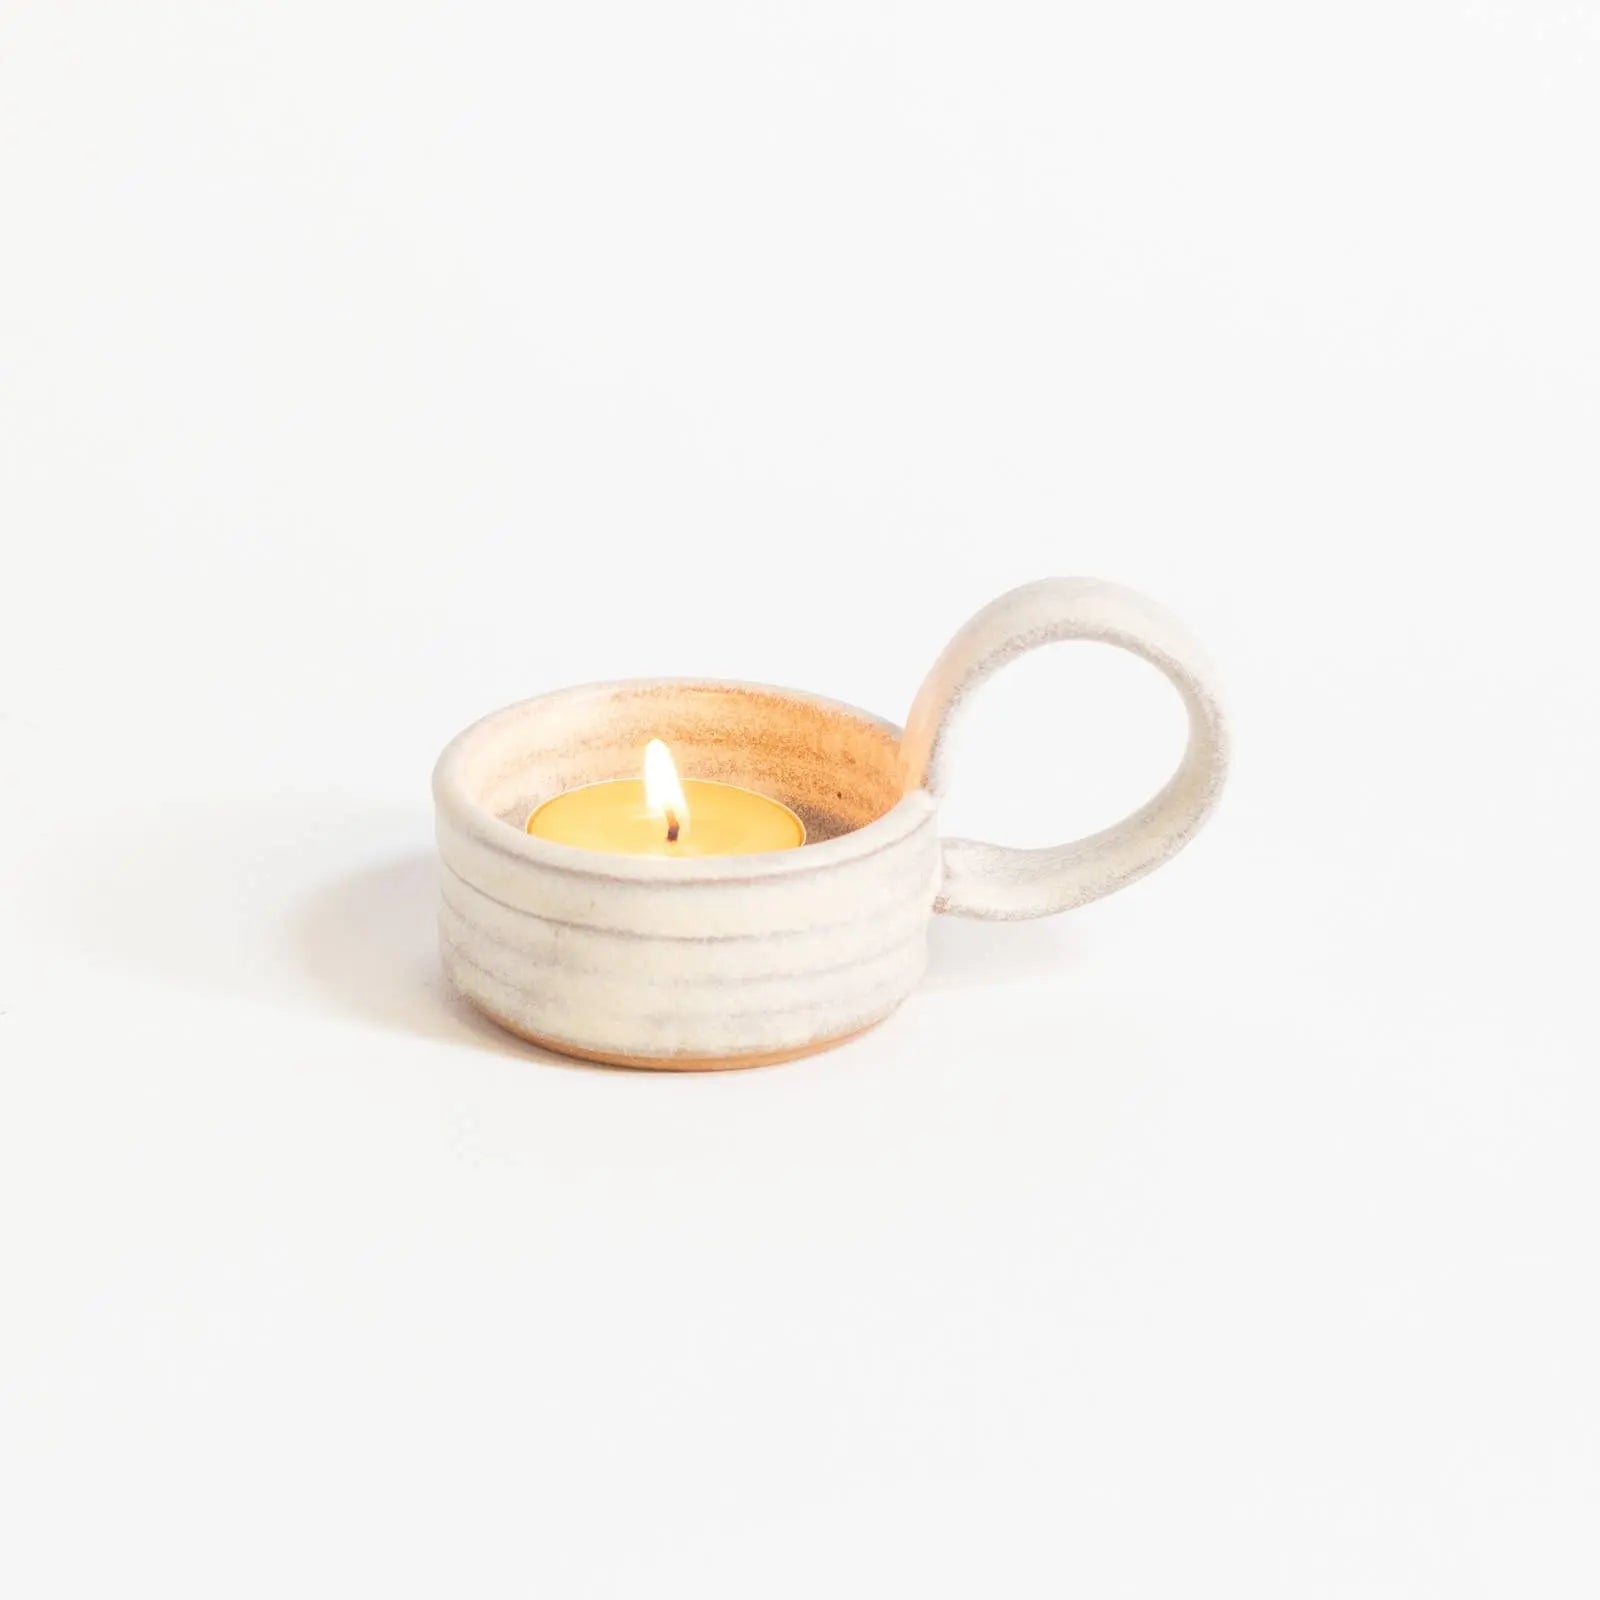 Tealite with Handle | Handmade pottery Cream Niko and Me Home Decor